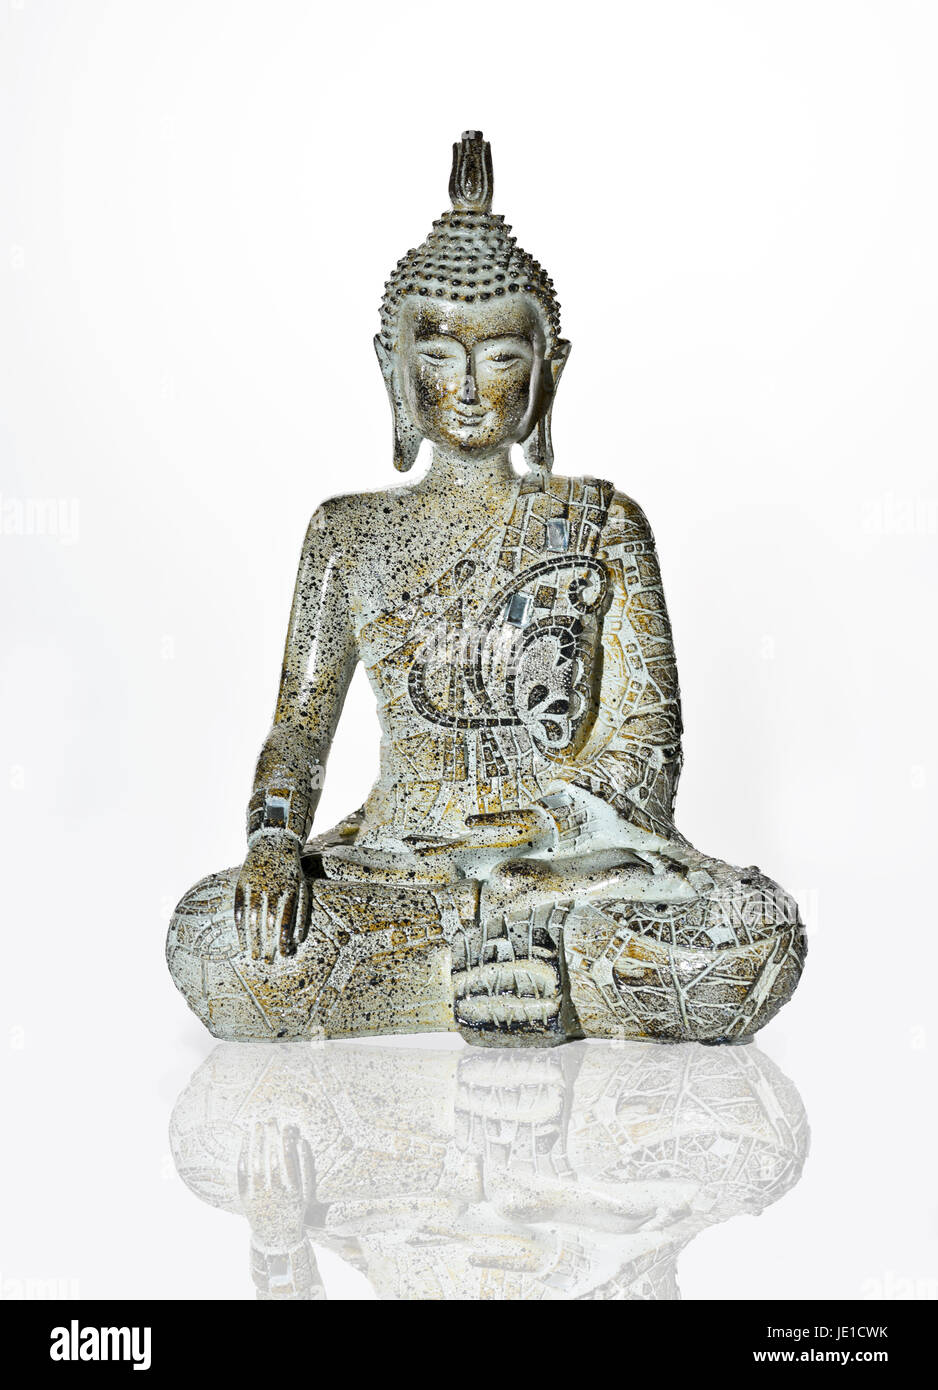 Buddha statue on white background with reflection Stock Photo